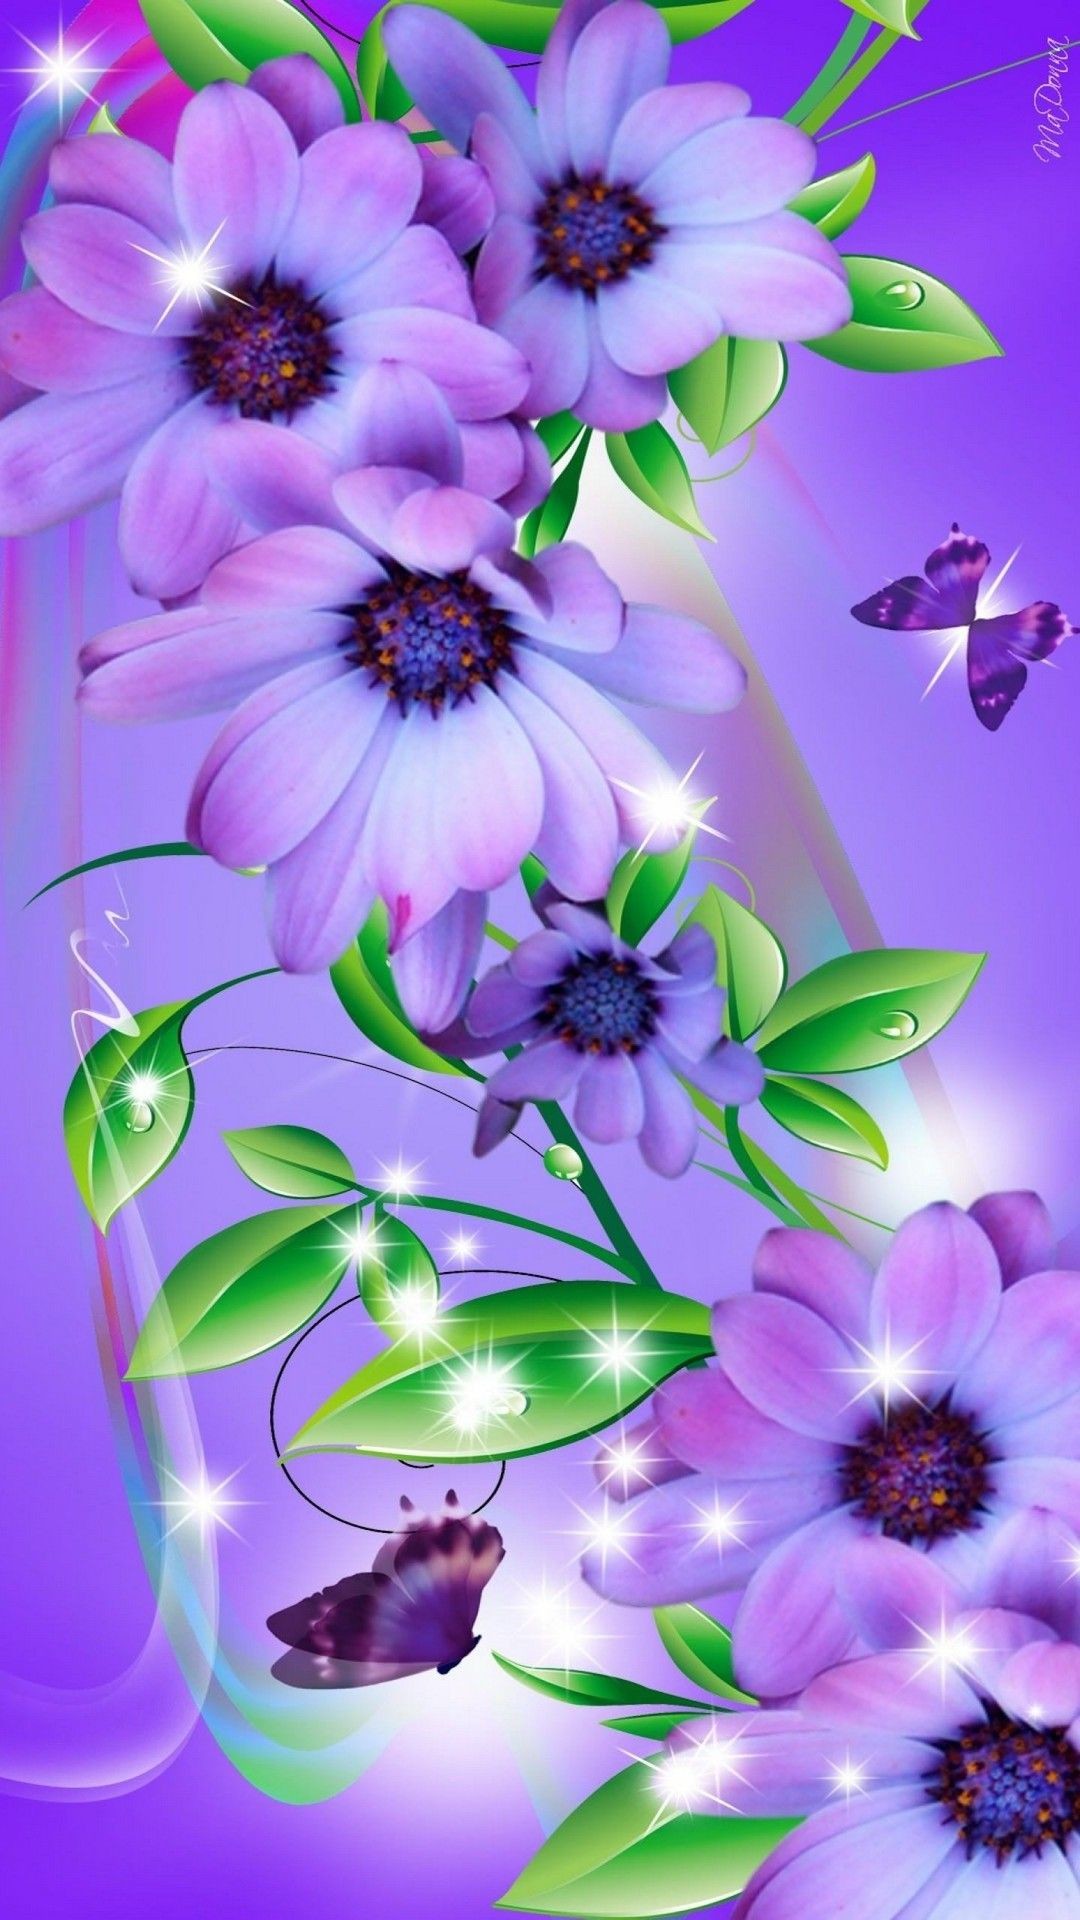 Flower And Butterfly Wallpaper Hd - HD Wallpaper 